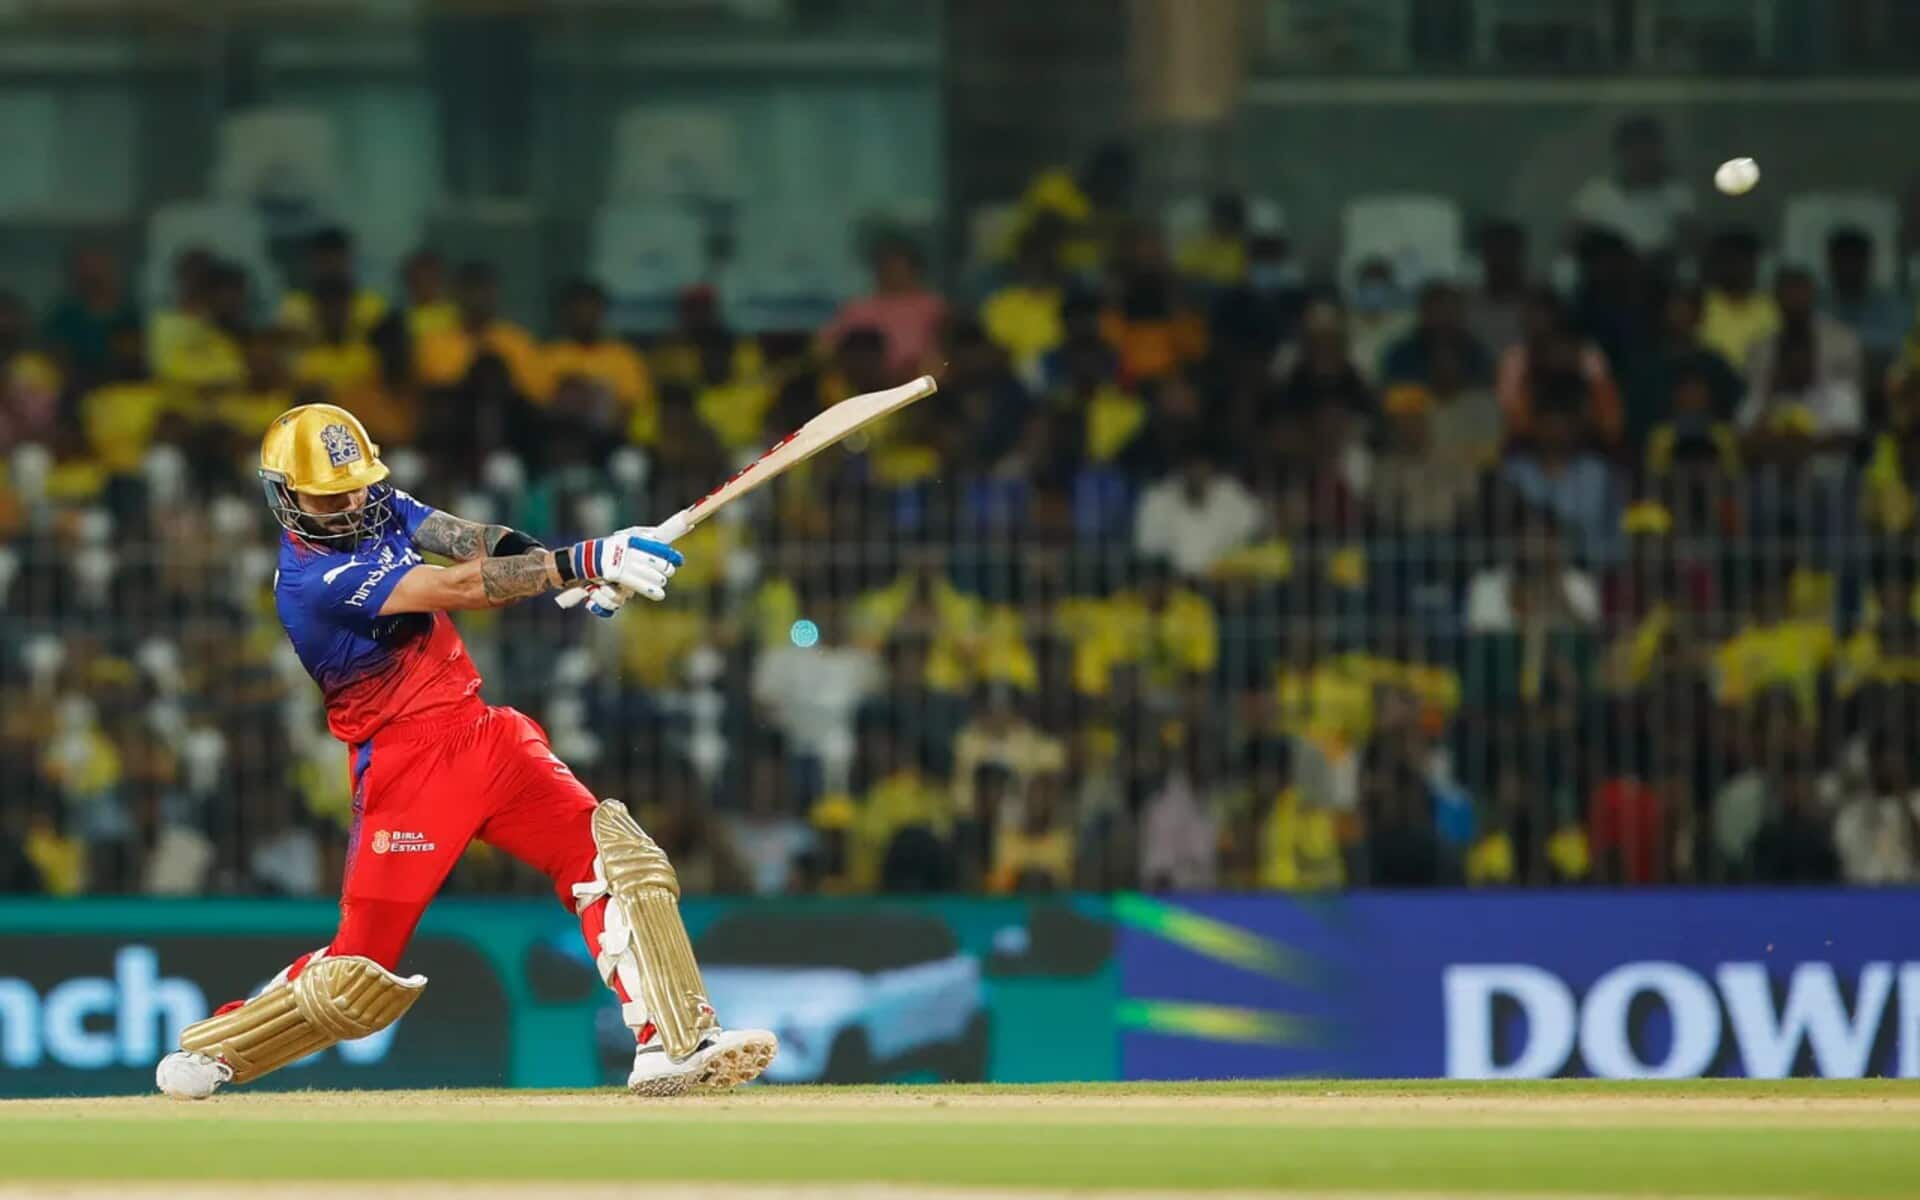 Virat Kohli breached the 12,000 run mark in T20s (Source: IPL)